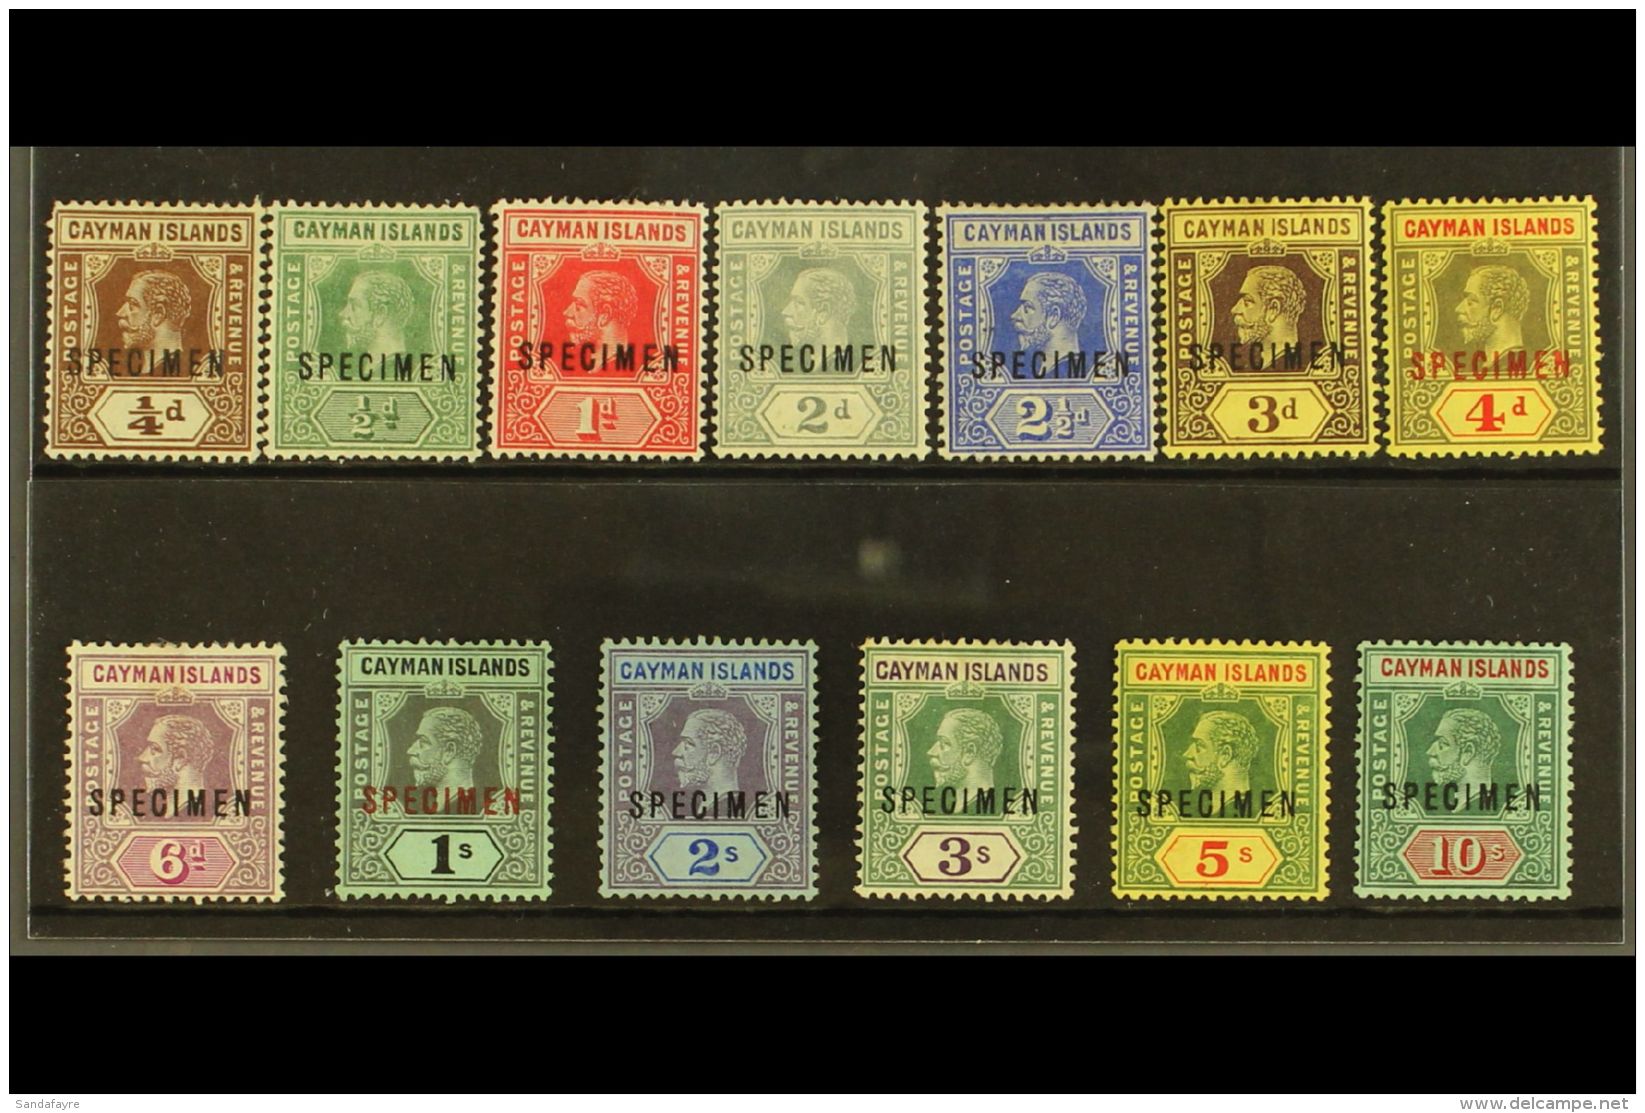 1912-20 SPECIMENS  KGV Complete Set With "SPECIMEN" Overprints, SG 40s/52s, Fine Mint With Good Colour.... - Kaimaninseln